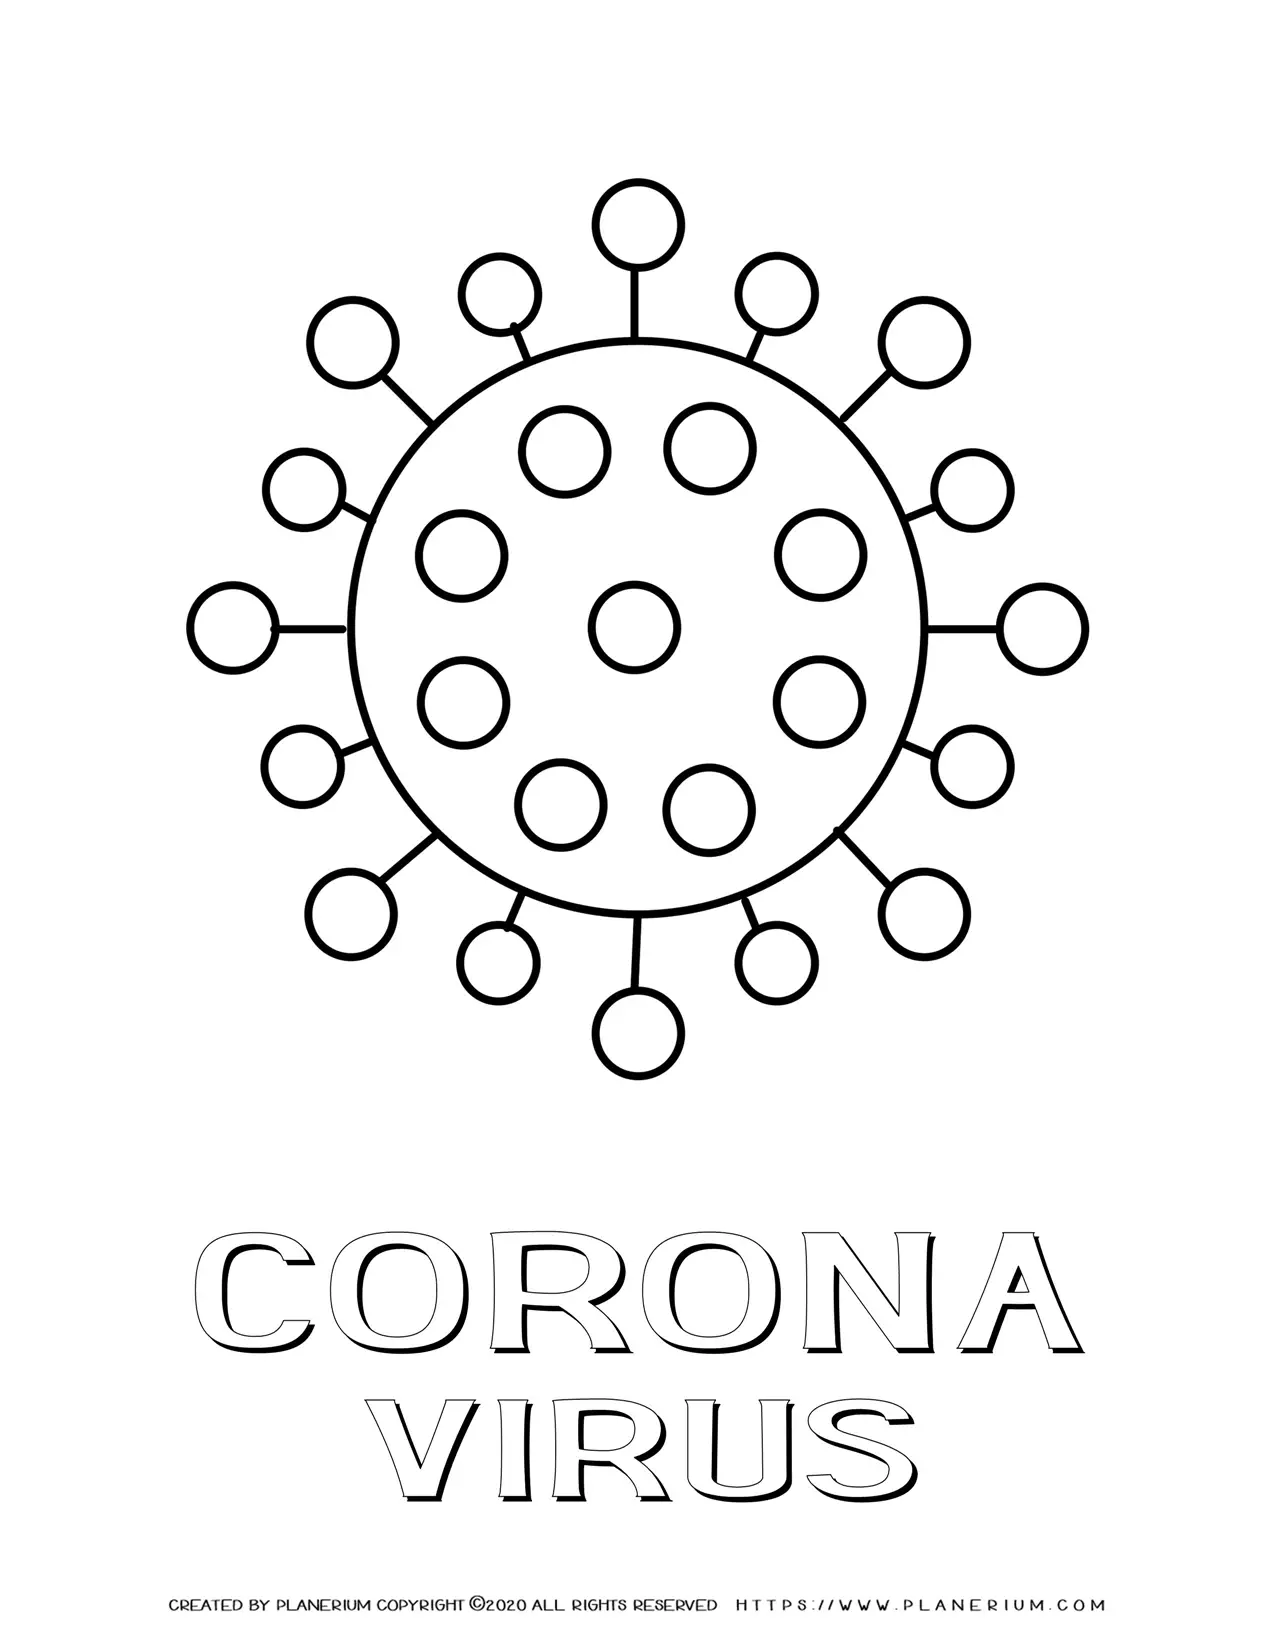 Coronavirus - Coloring Page | Planerium